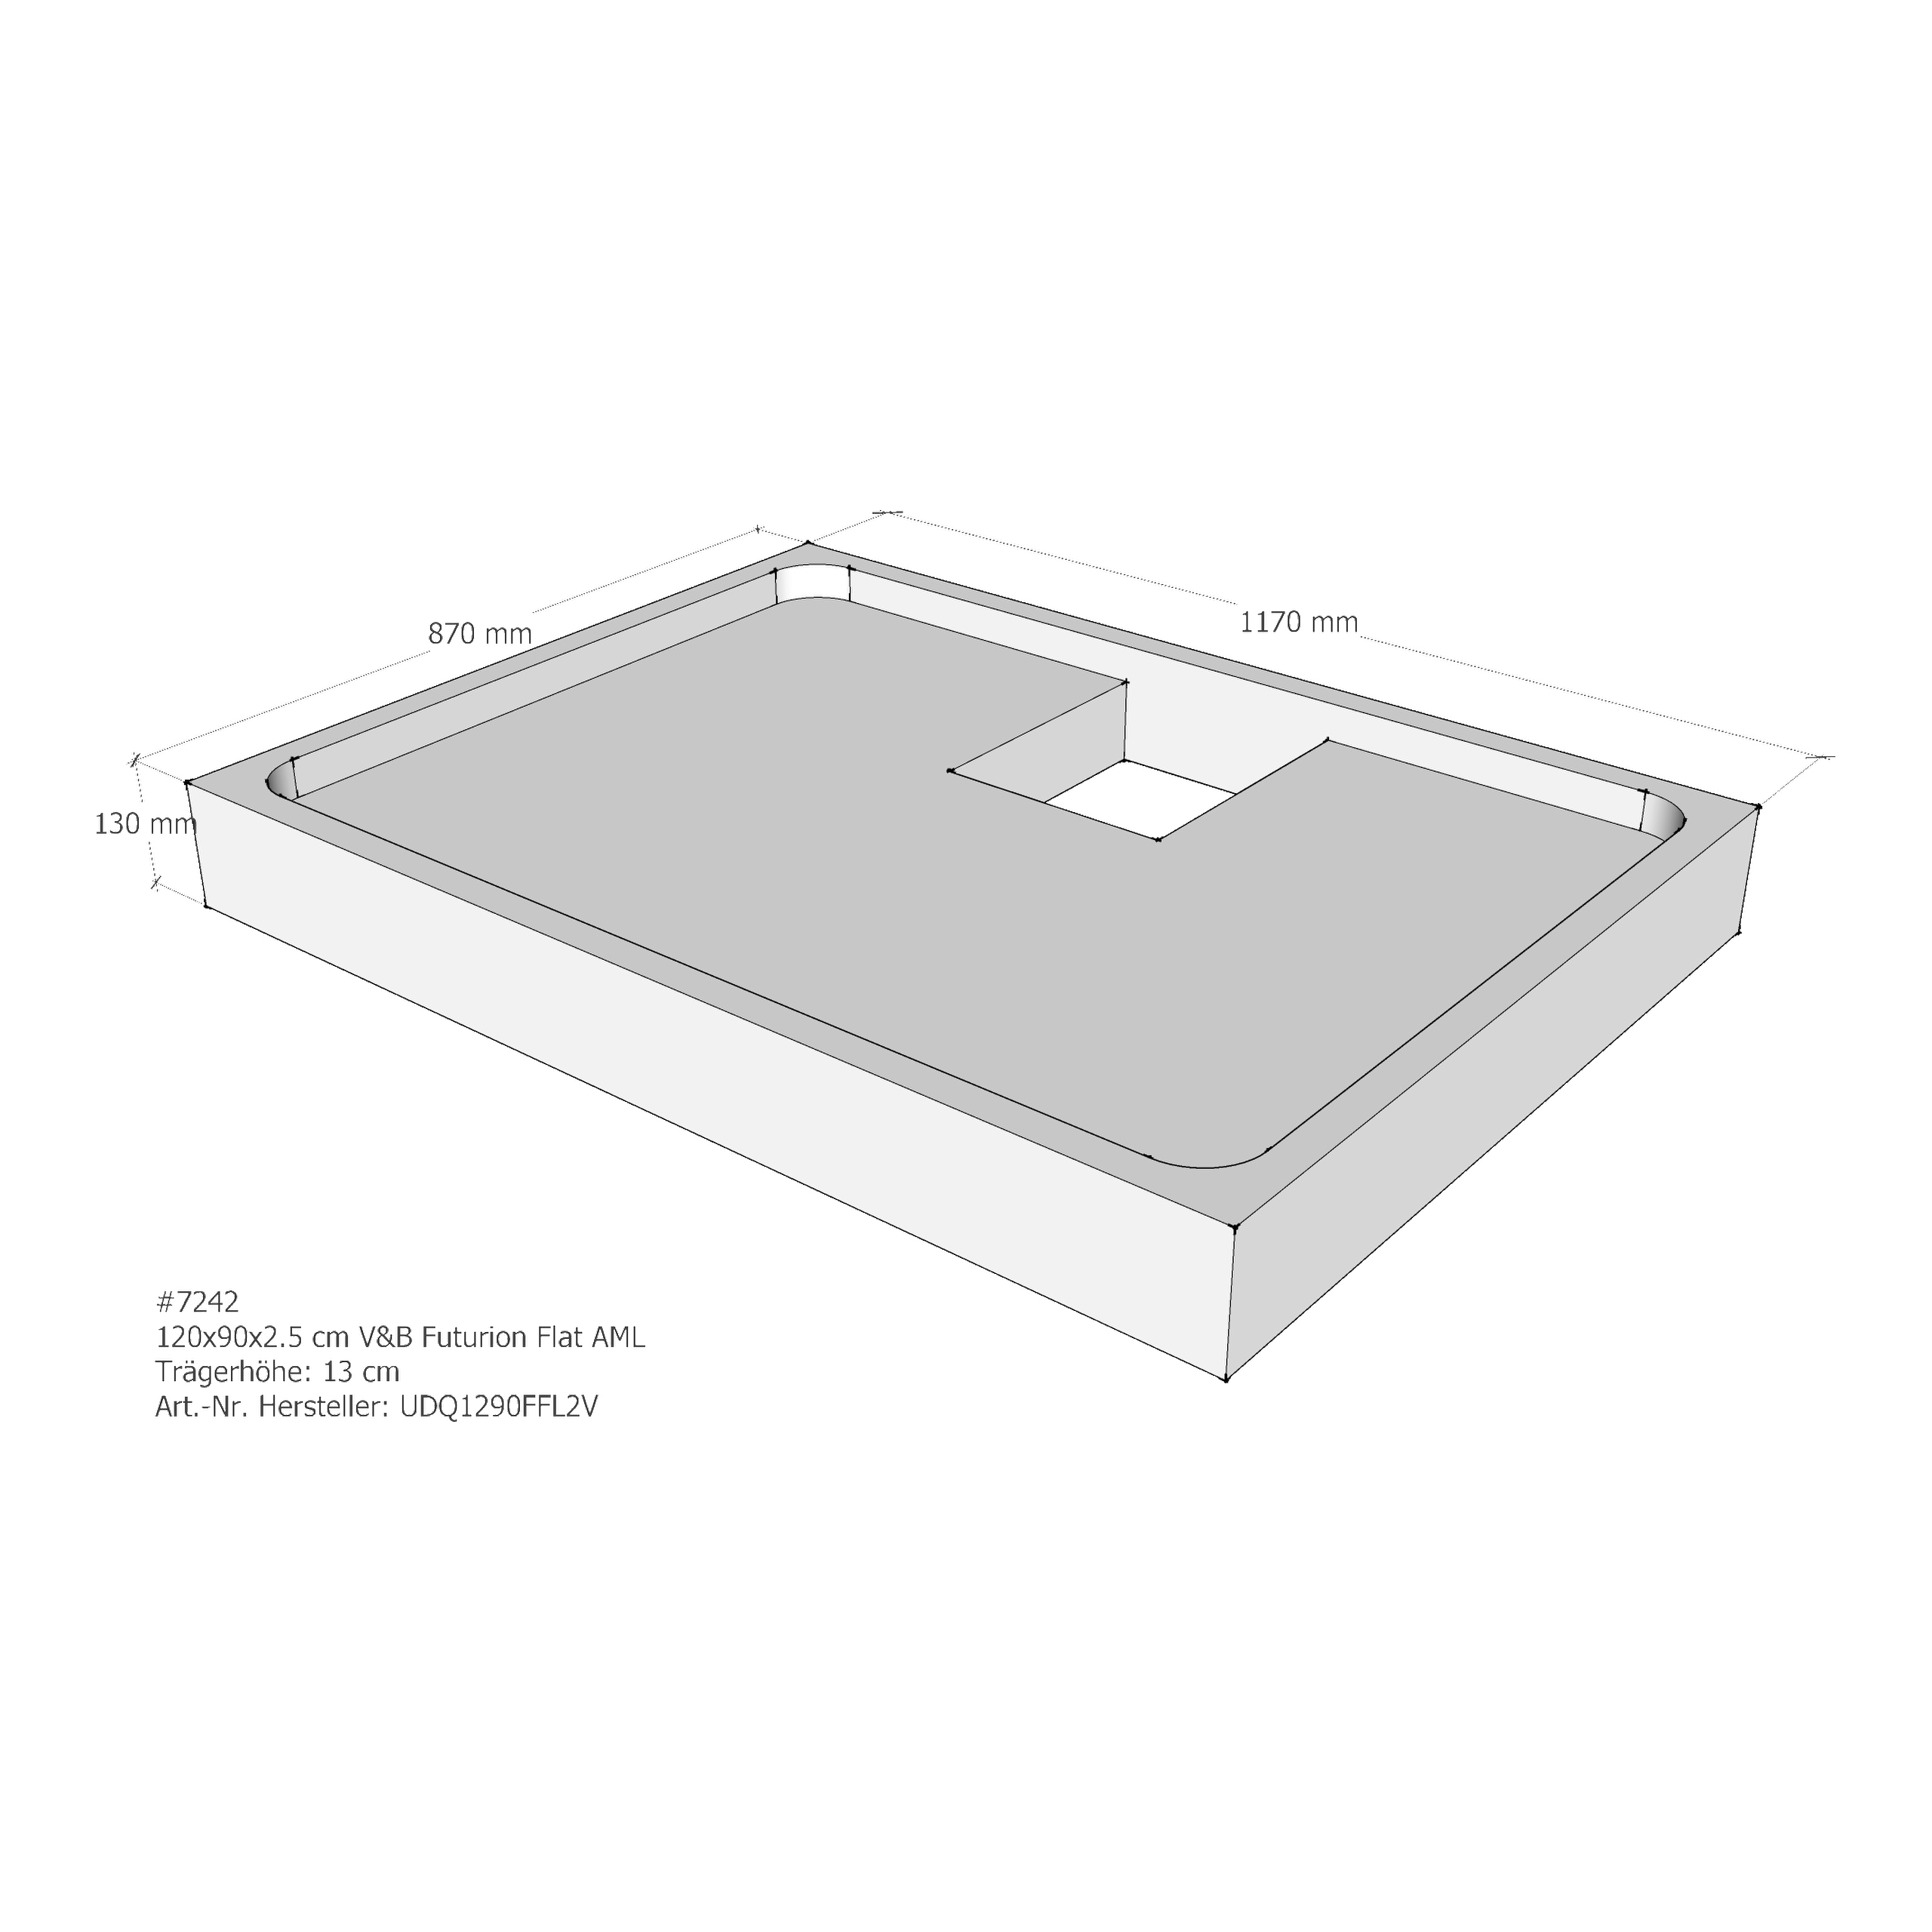 Duschwannenträger für Villeroy & Boch Futurion Flat 120 × 90 × 2,5 cm